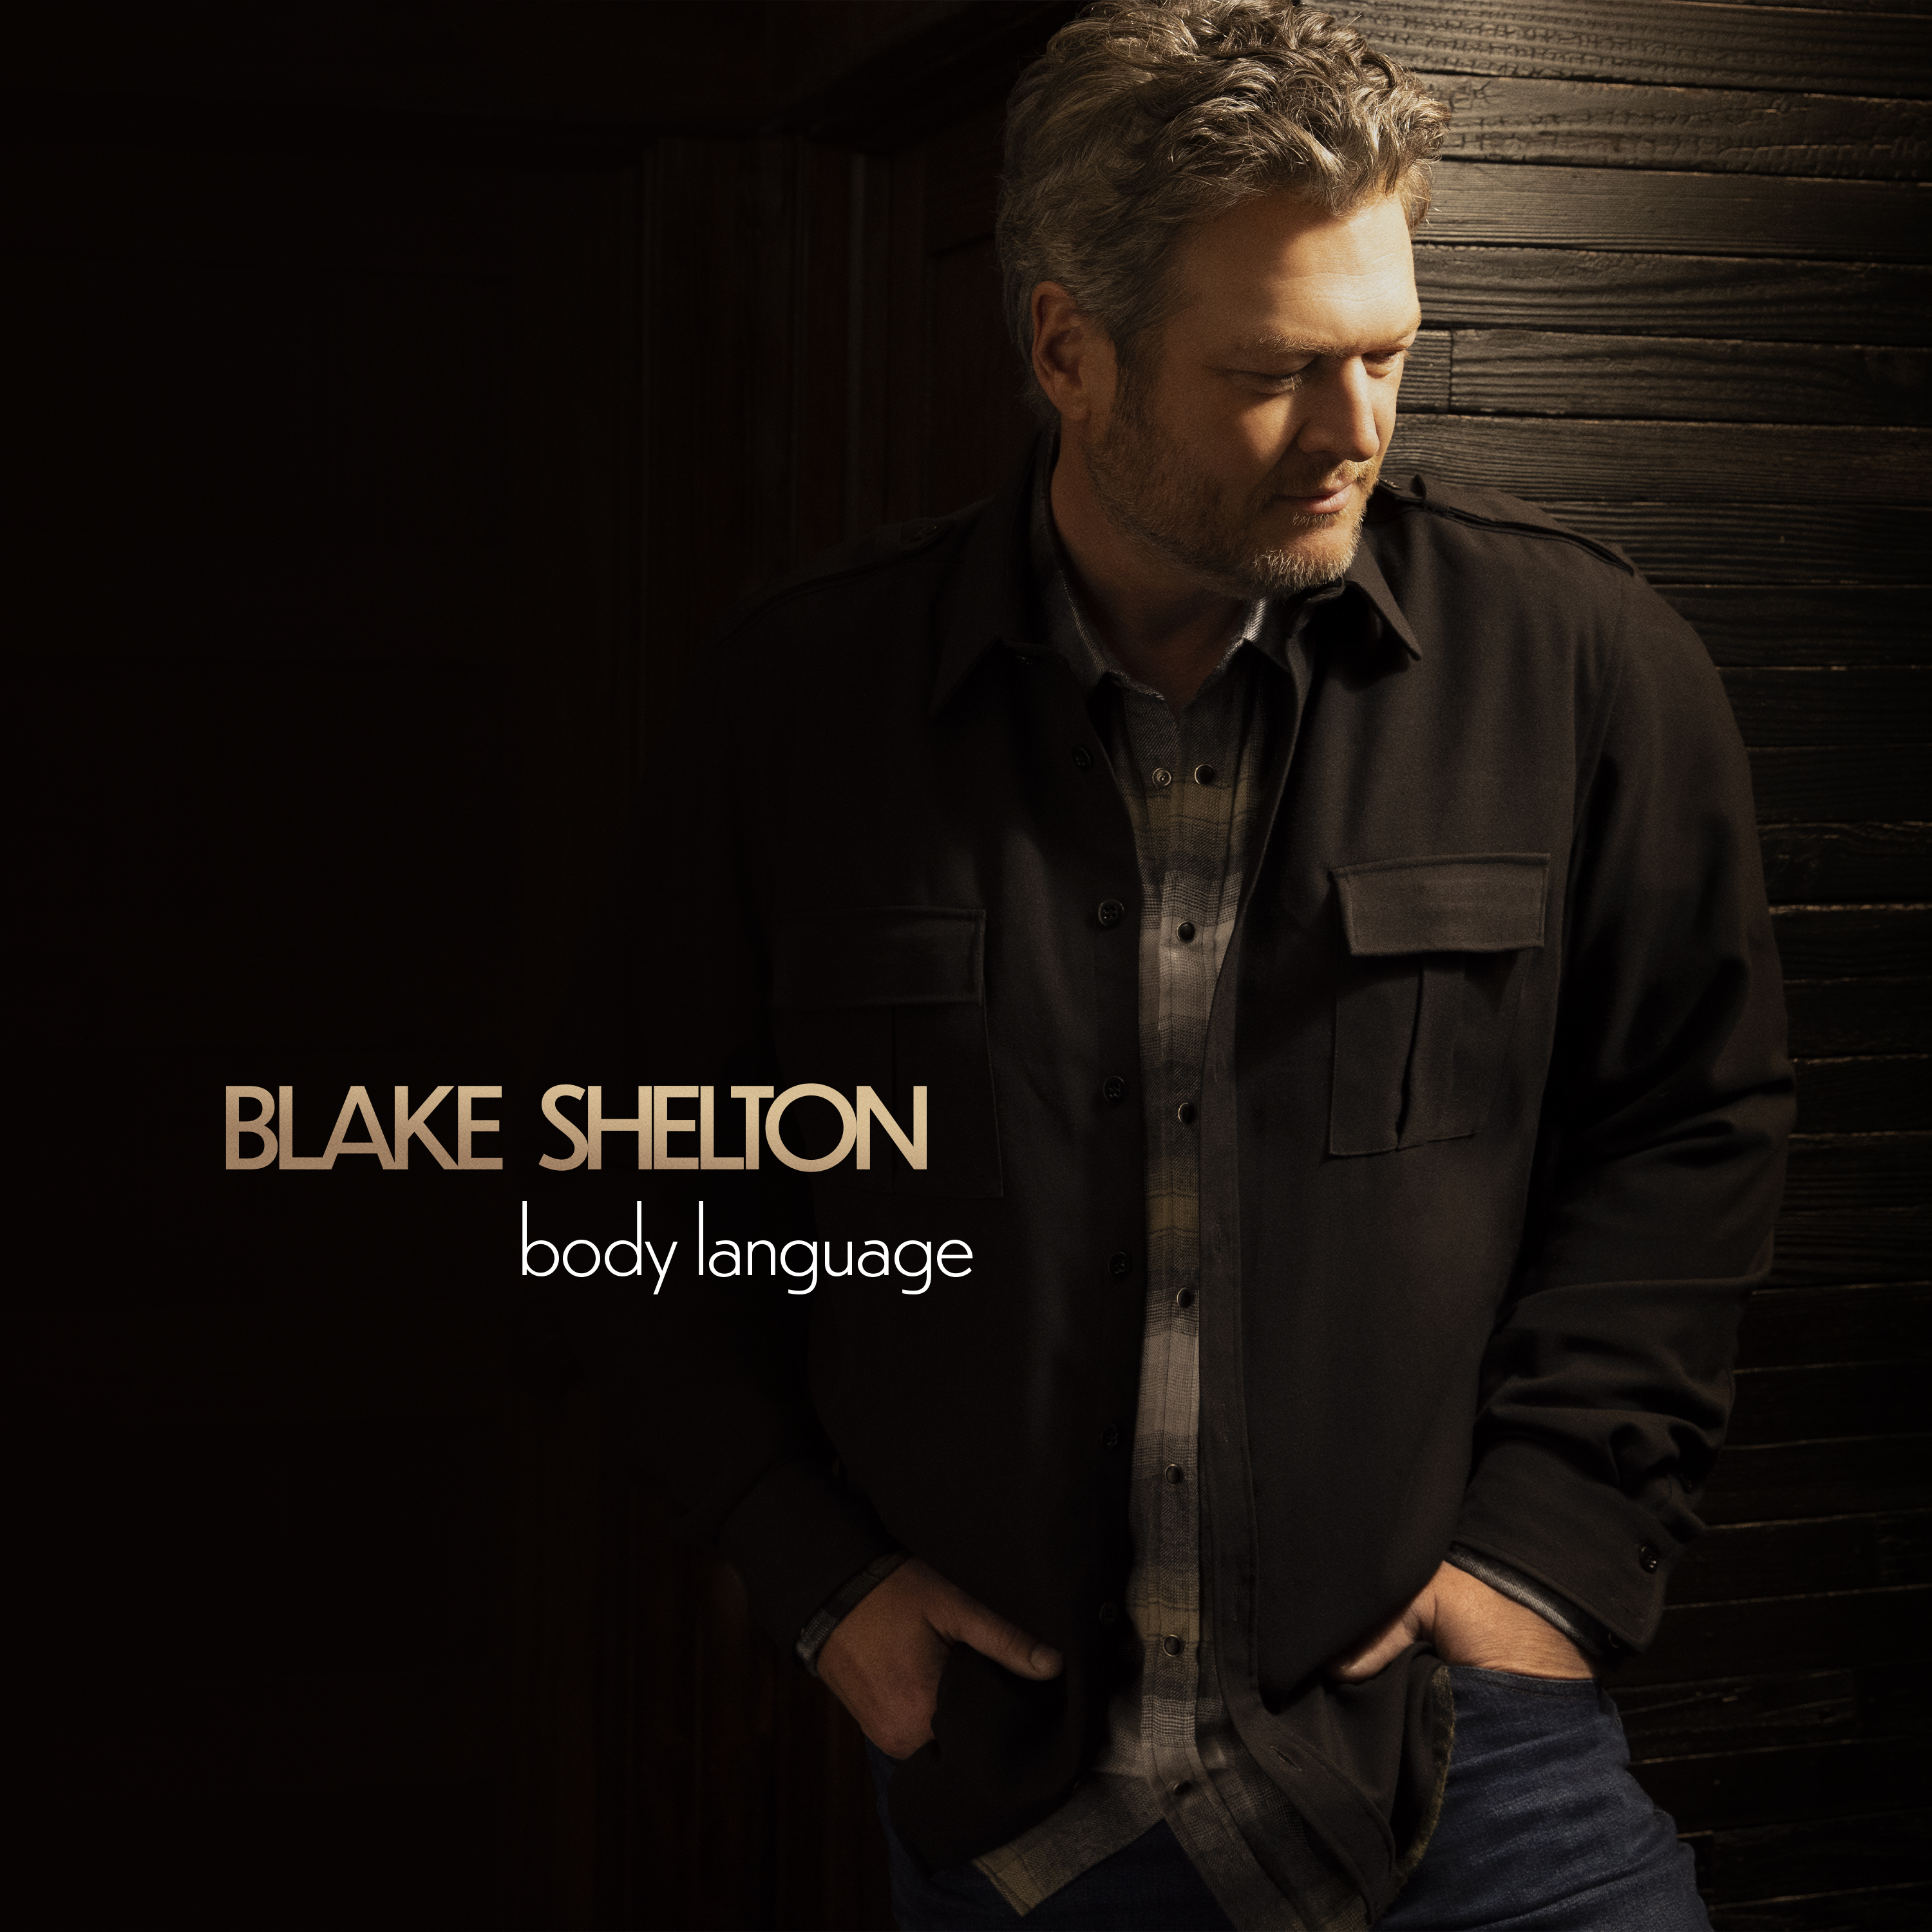 BLAKE SHELTON SPEAKS BODY LANGUAGE IN BRAND-NEW ALBUM, OUT MAY 21